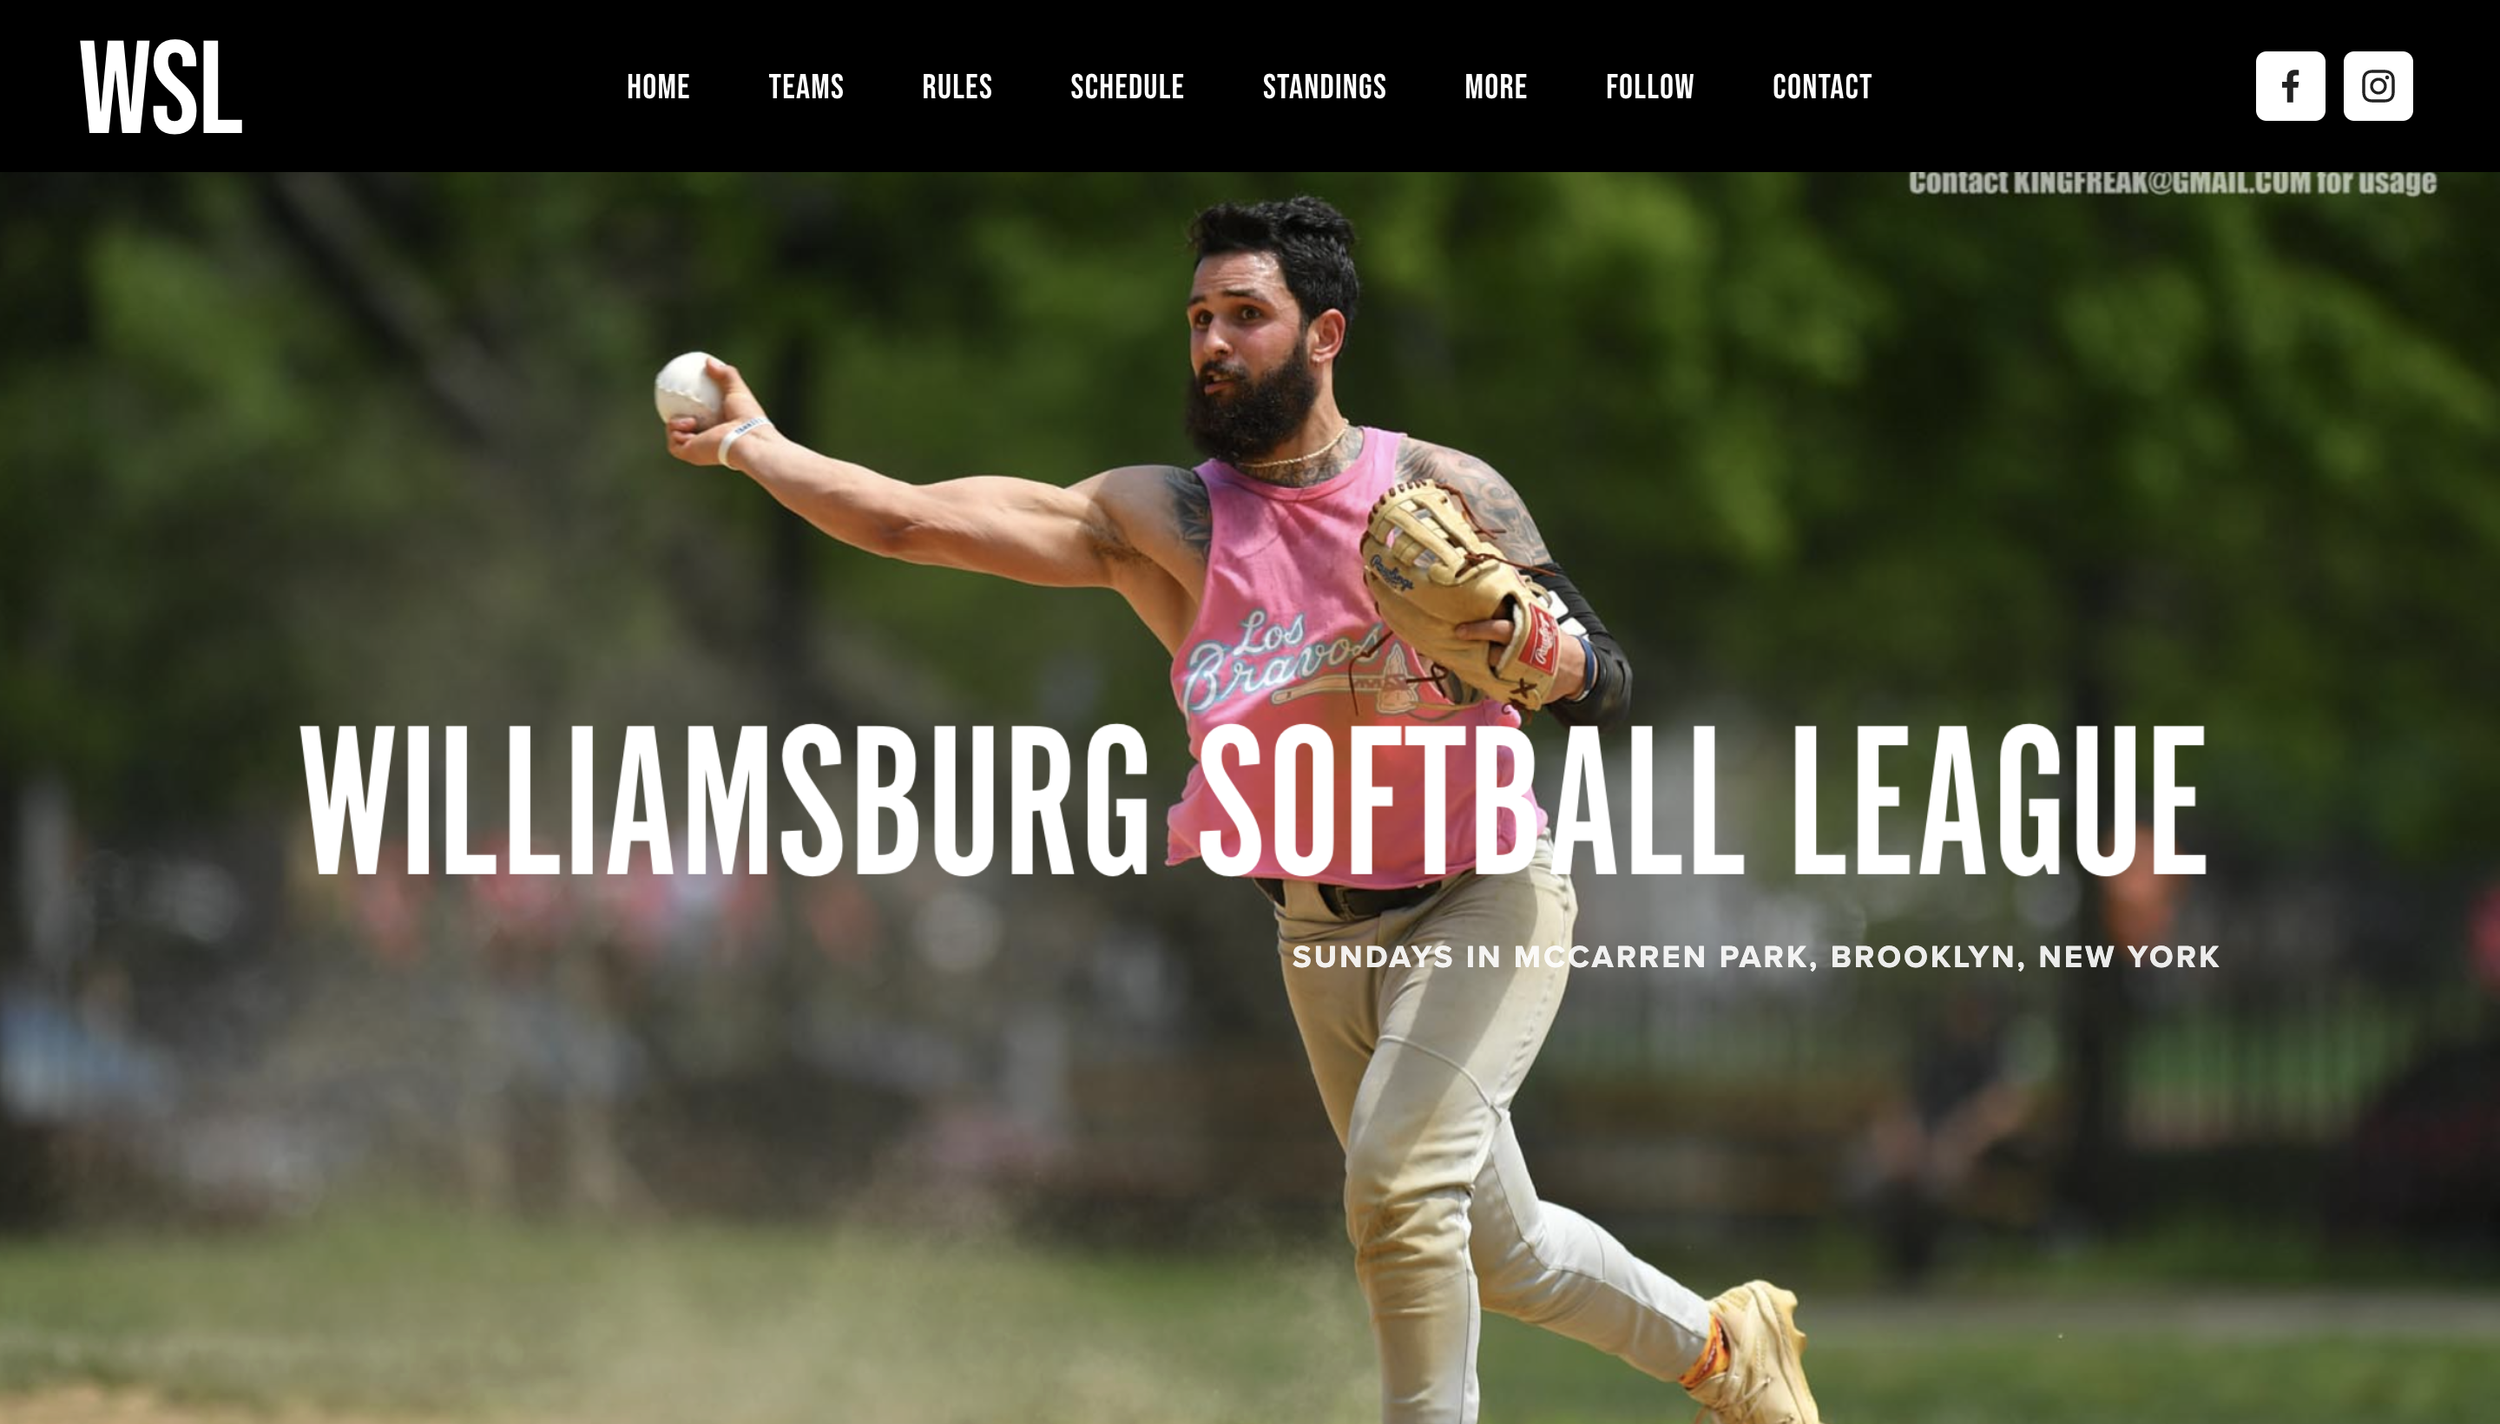 Williamsburg Softball League, NYC